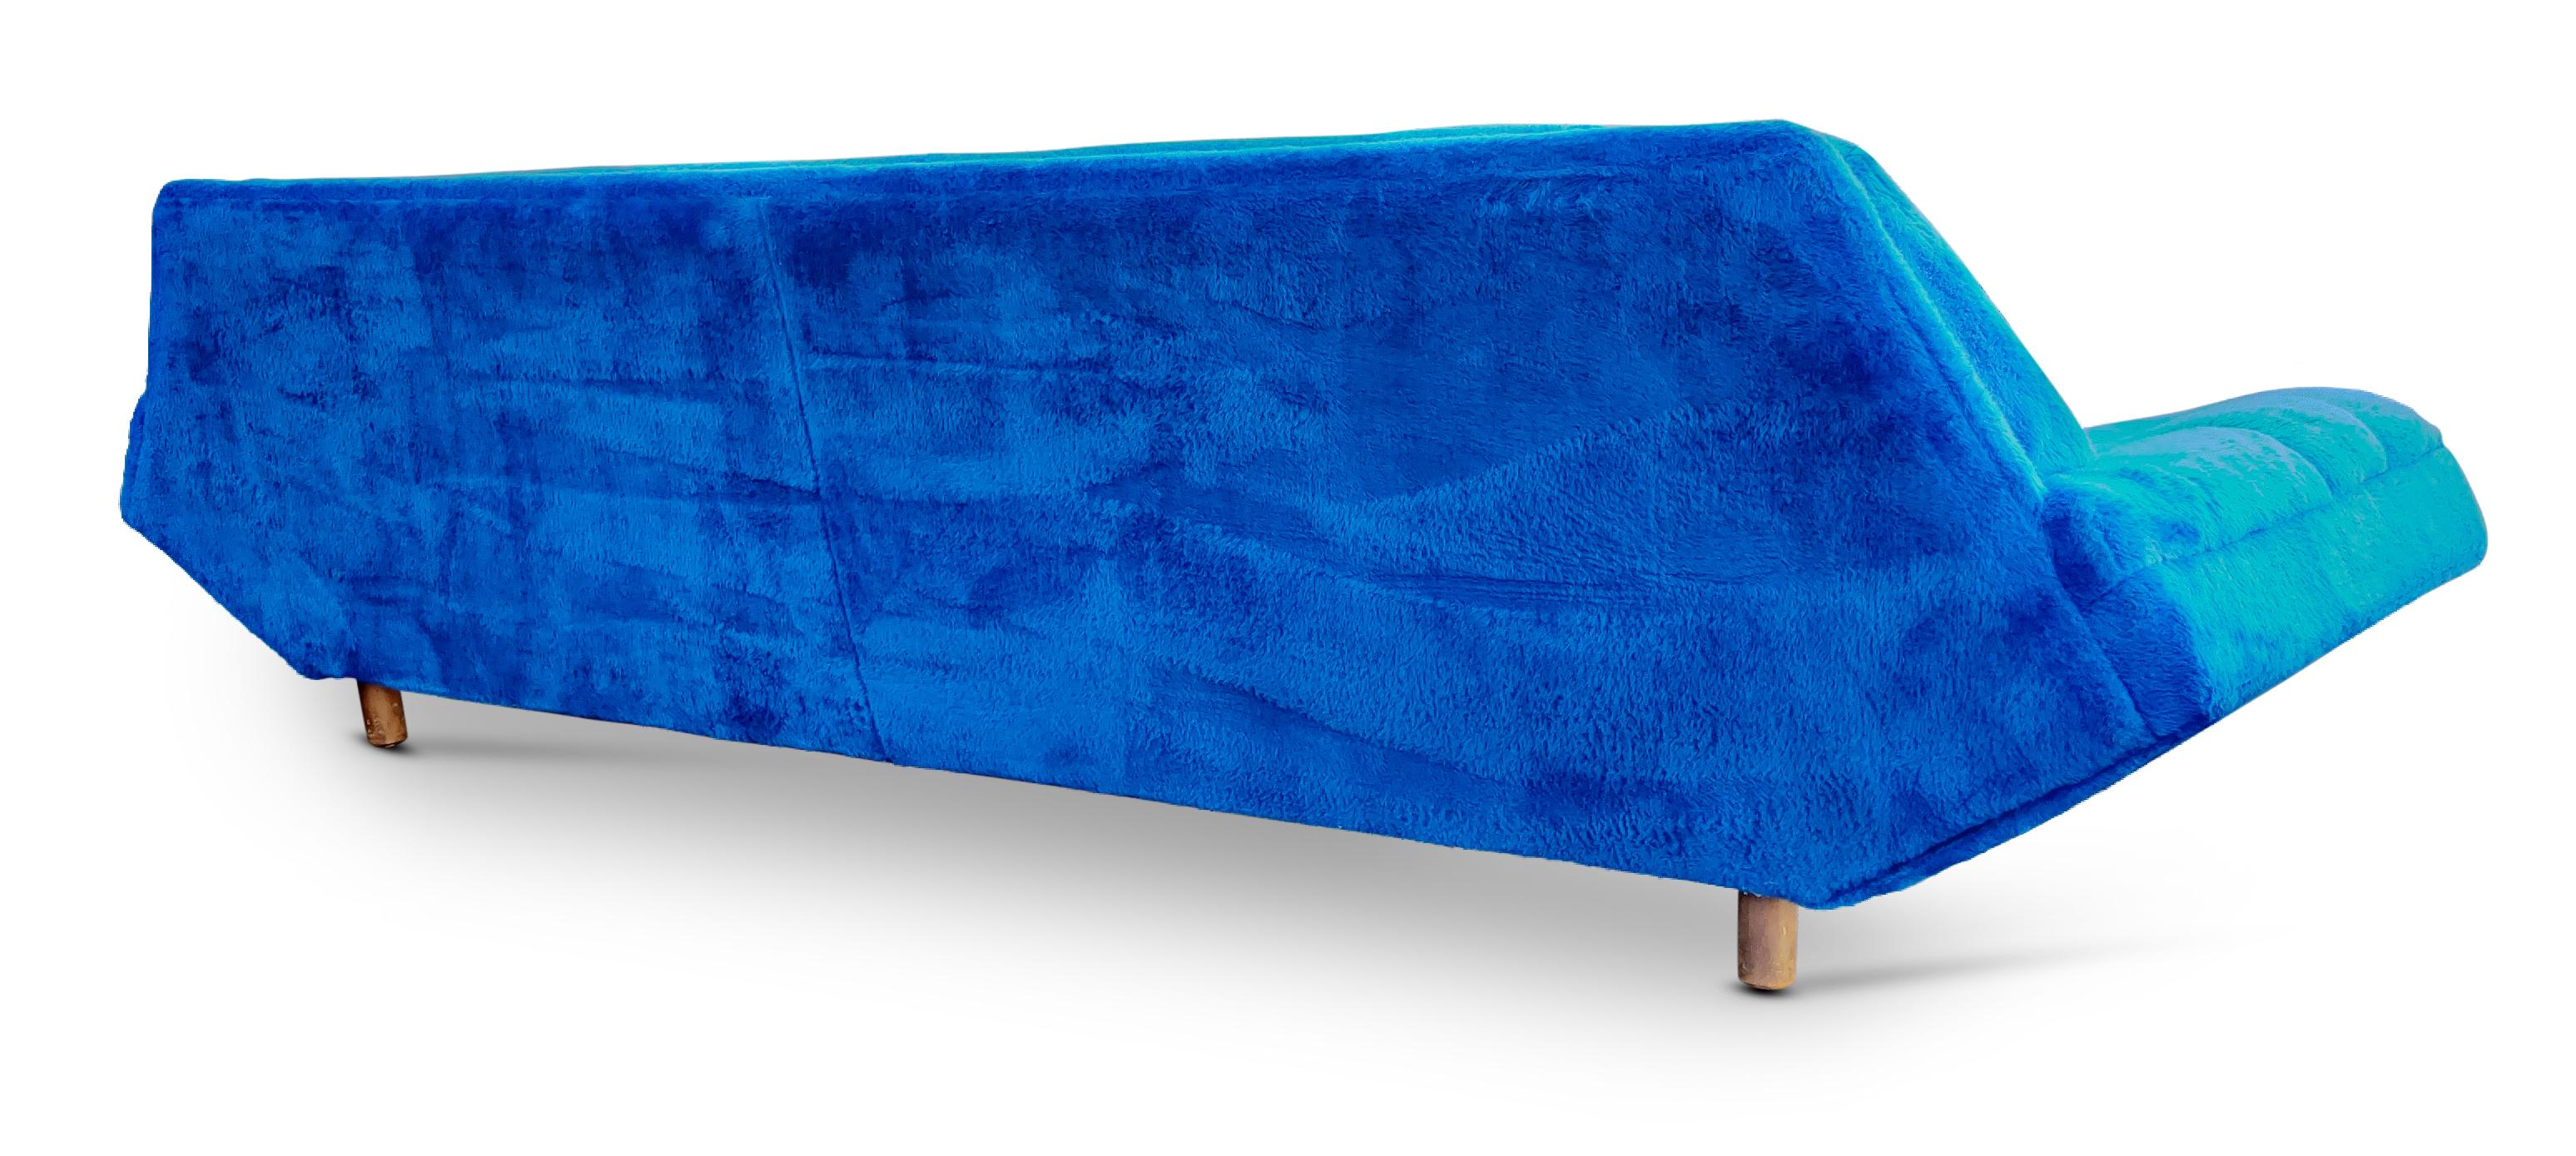 Late 20th Century Blue Adrian Pearsall Style Tufted Gondola Sofa Walnut Mid-Century Modern